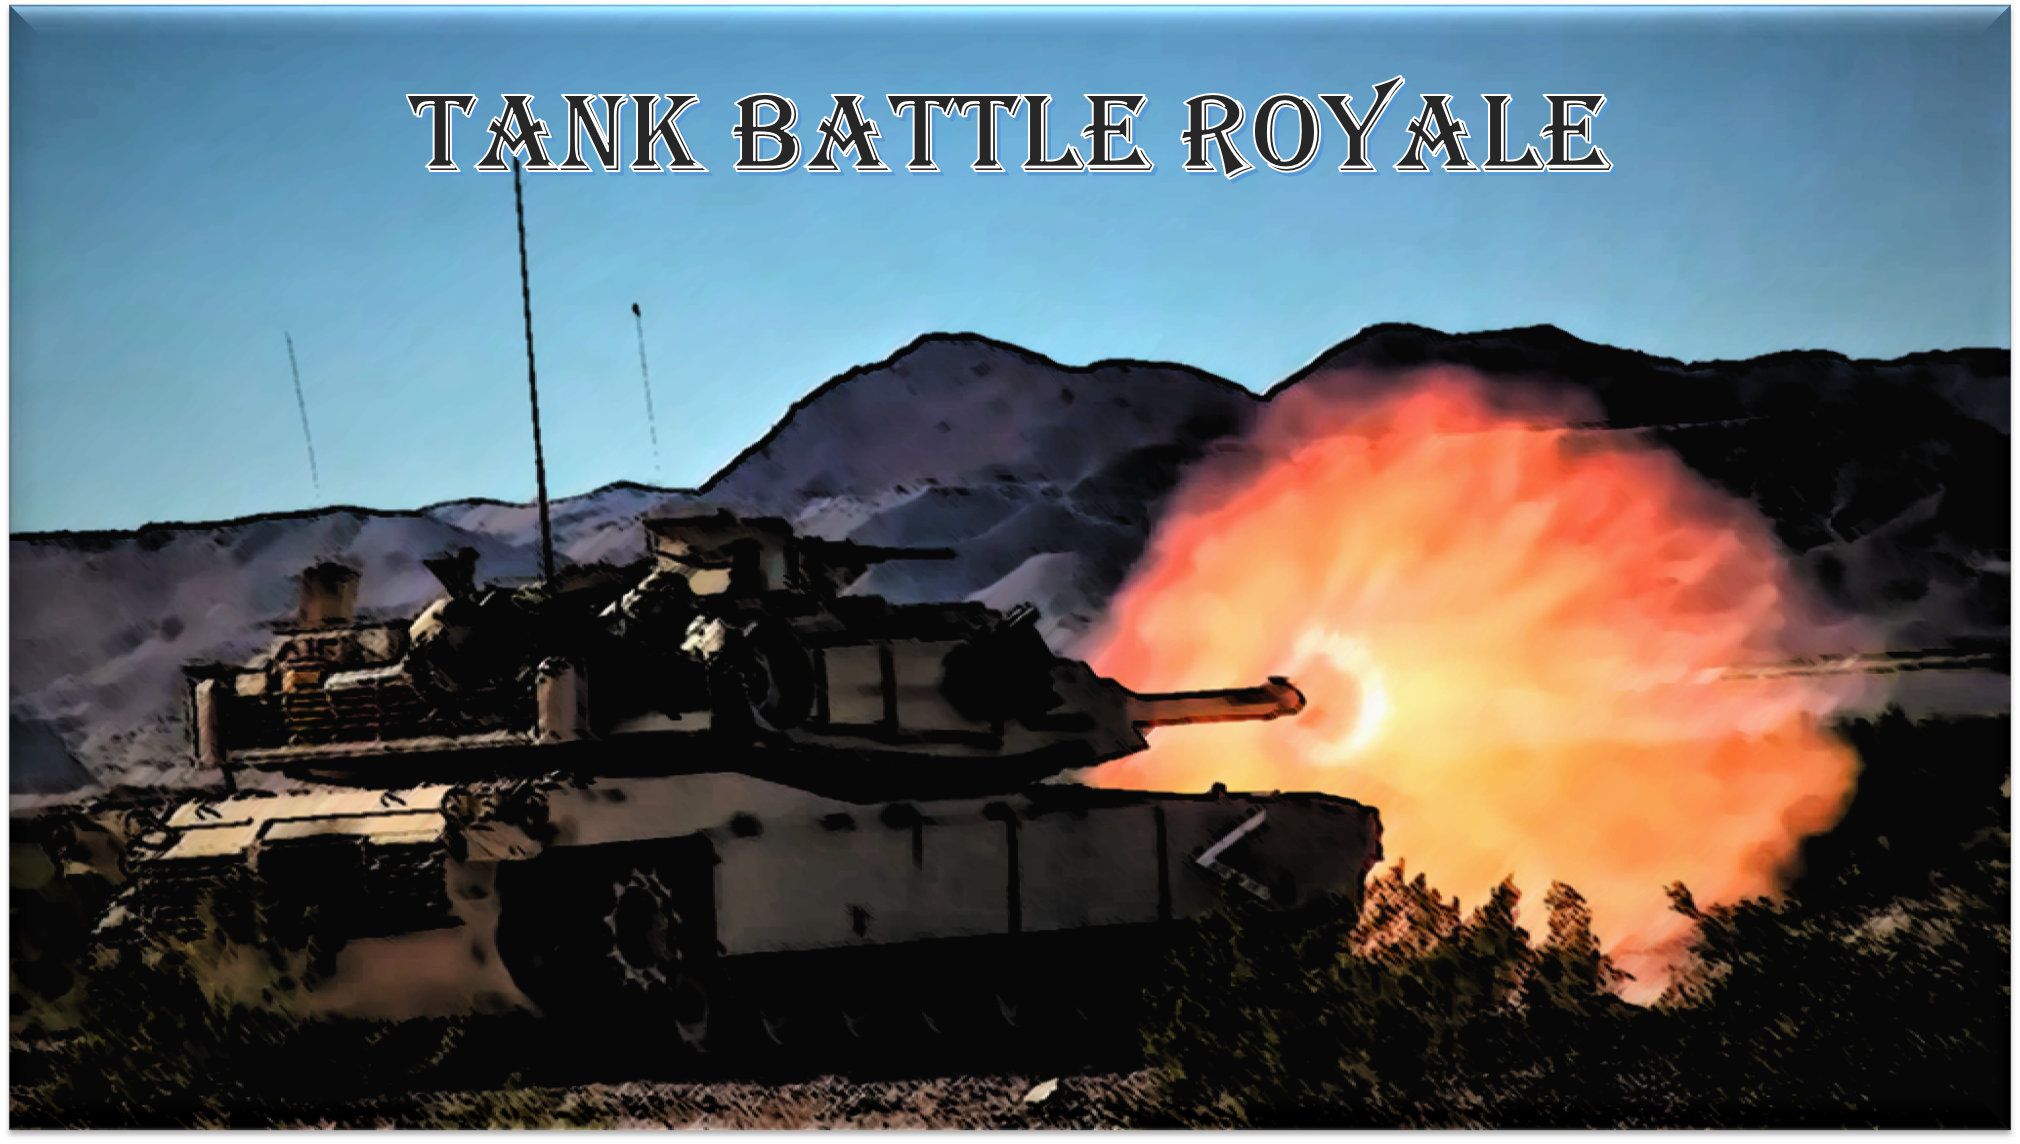 world of tanks - grand battle royale mode